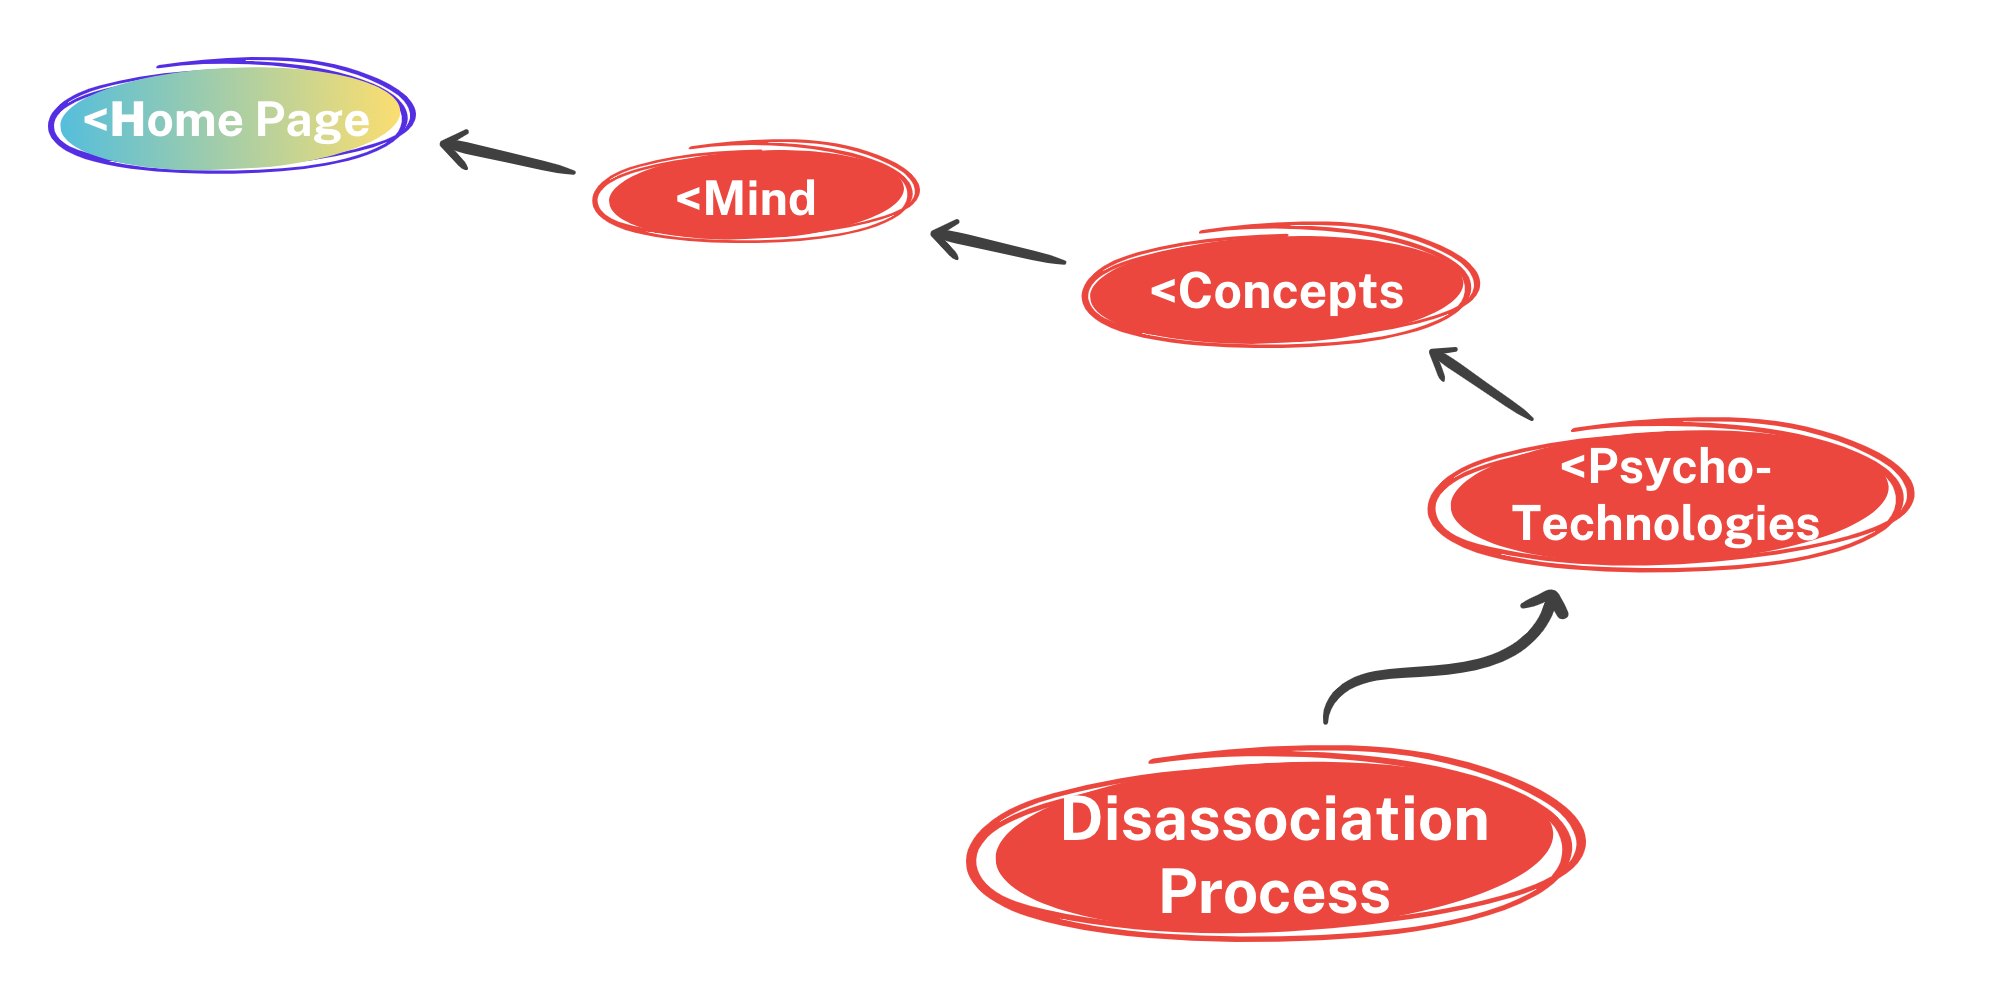 Disassociation Process